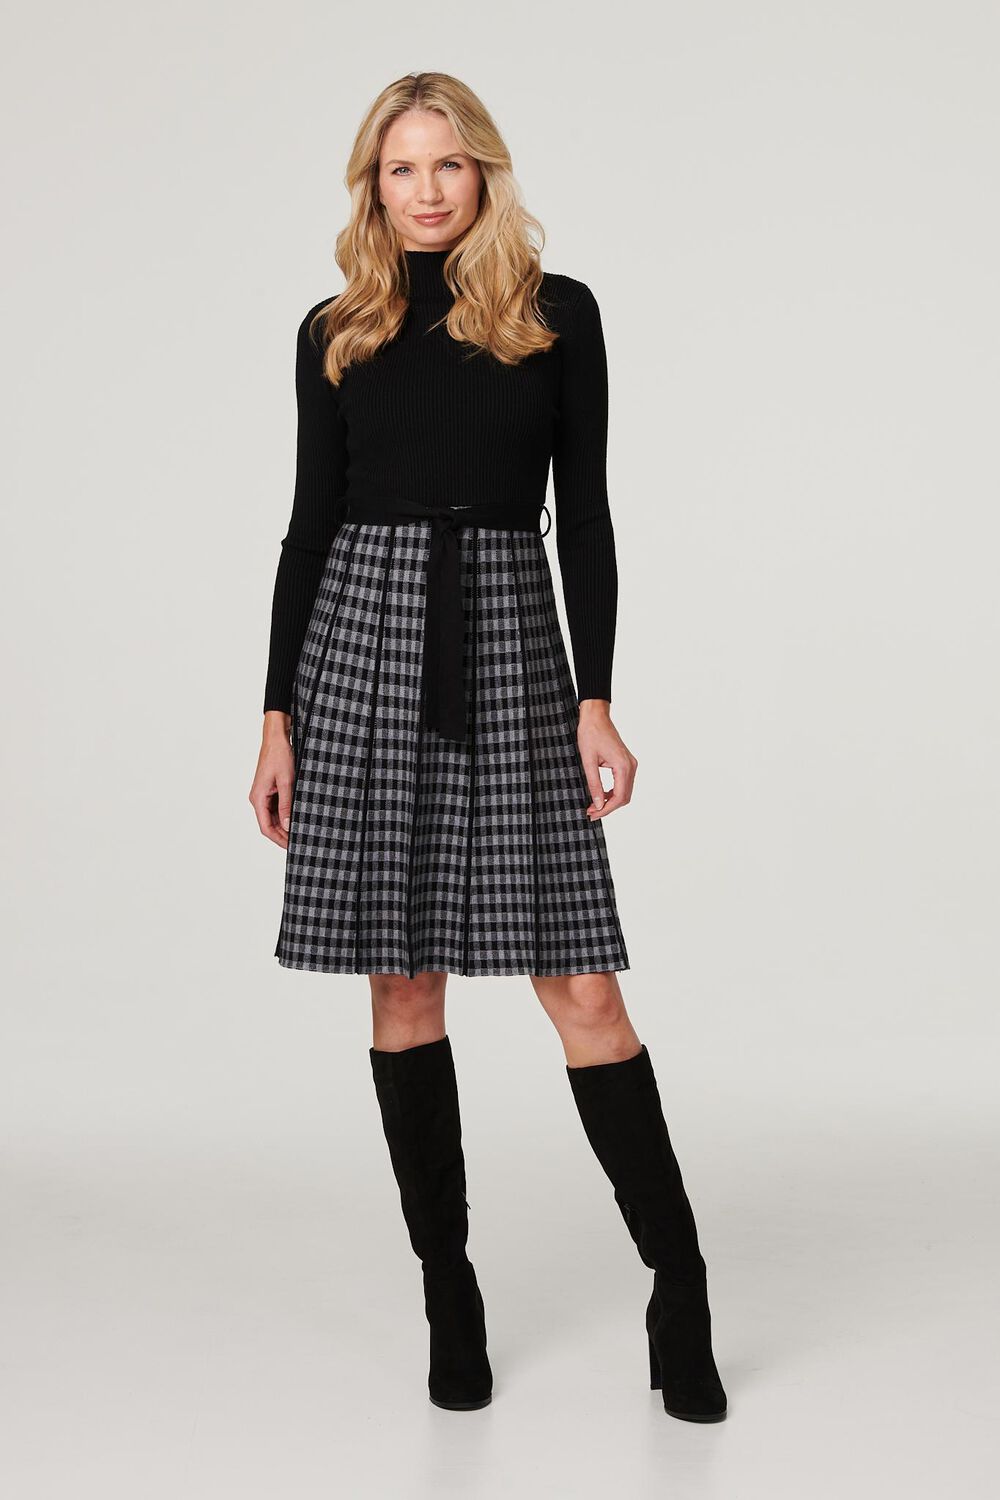 Izabel London Women’s Black and Grey Viscose Checked Stylish Long Sleeve High Neck Knit Dress, Size: 14